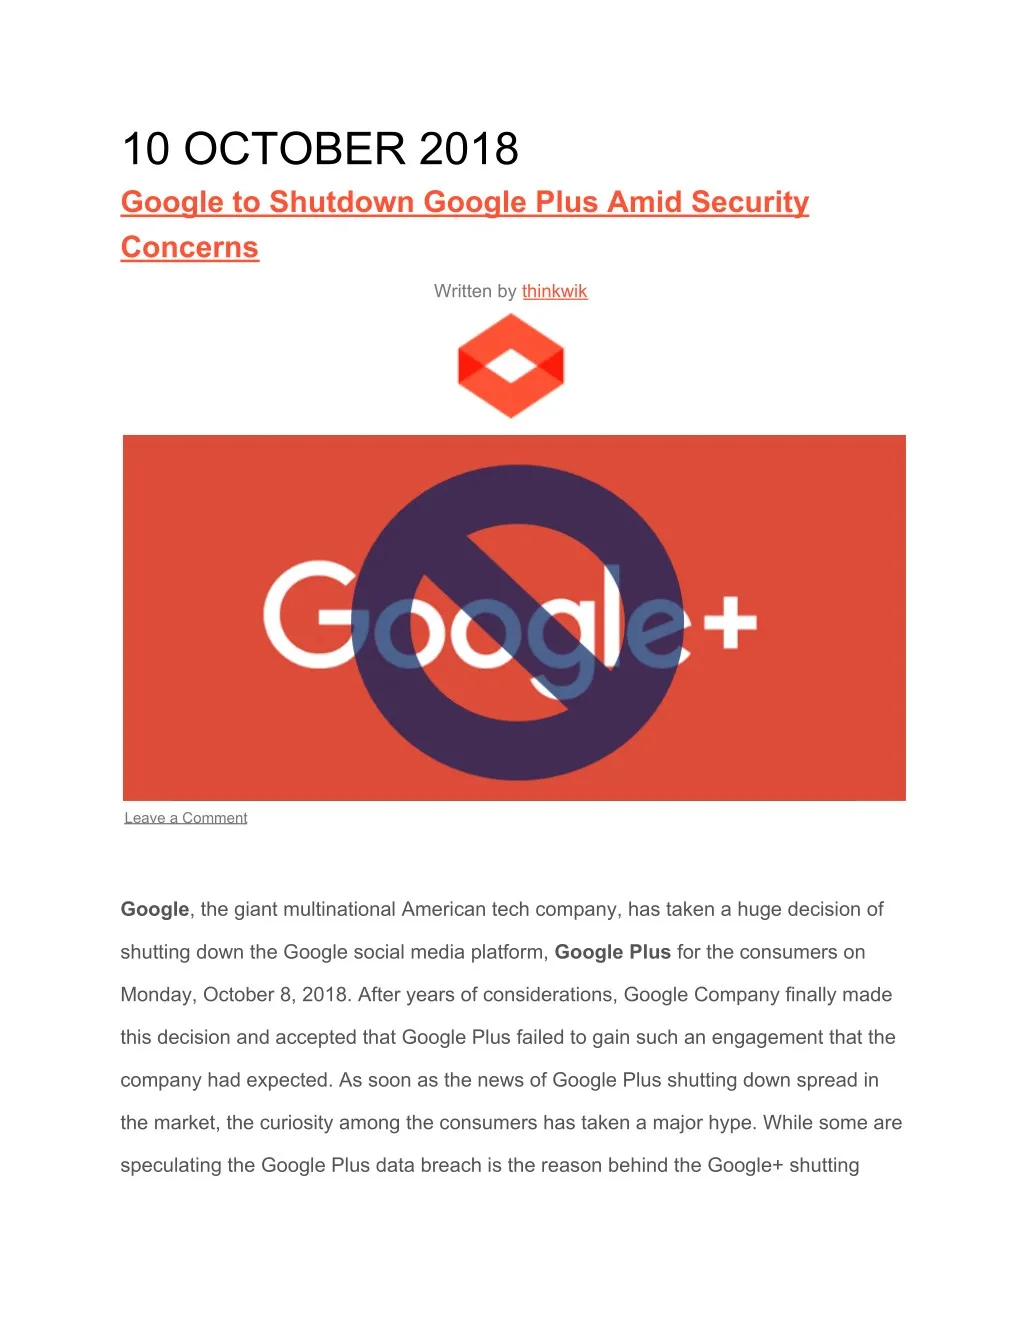 10 october 2018 google to shutdown google plus